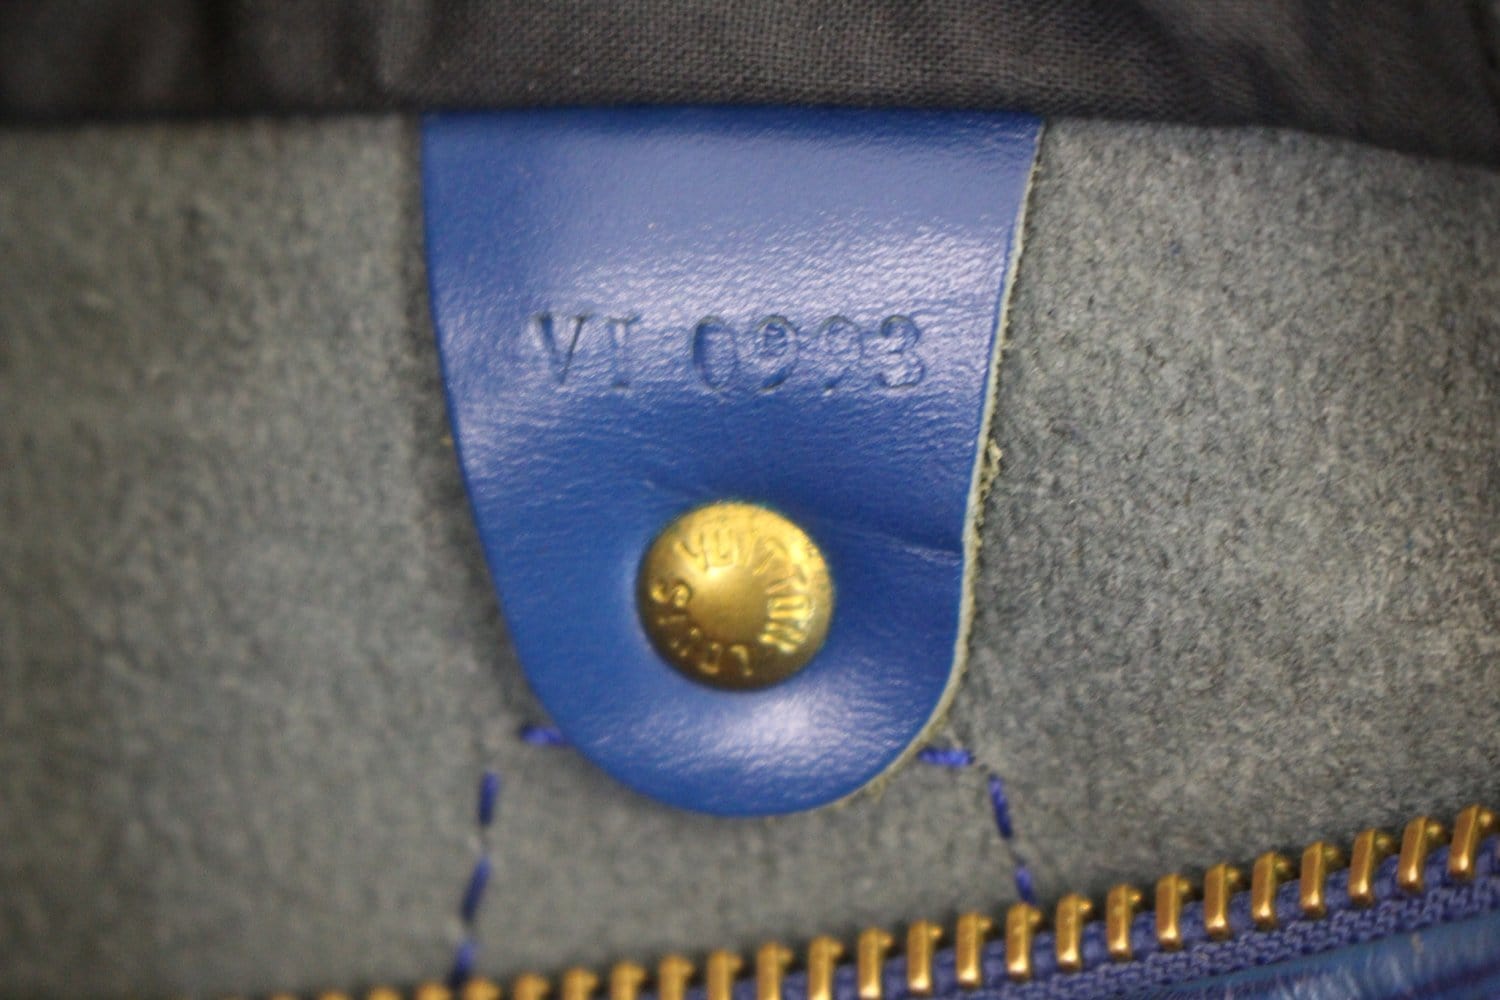 Louis Vuitton ○ 25Cm Blue Epi Speedy